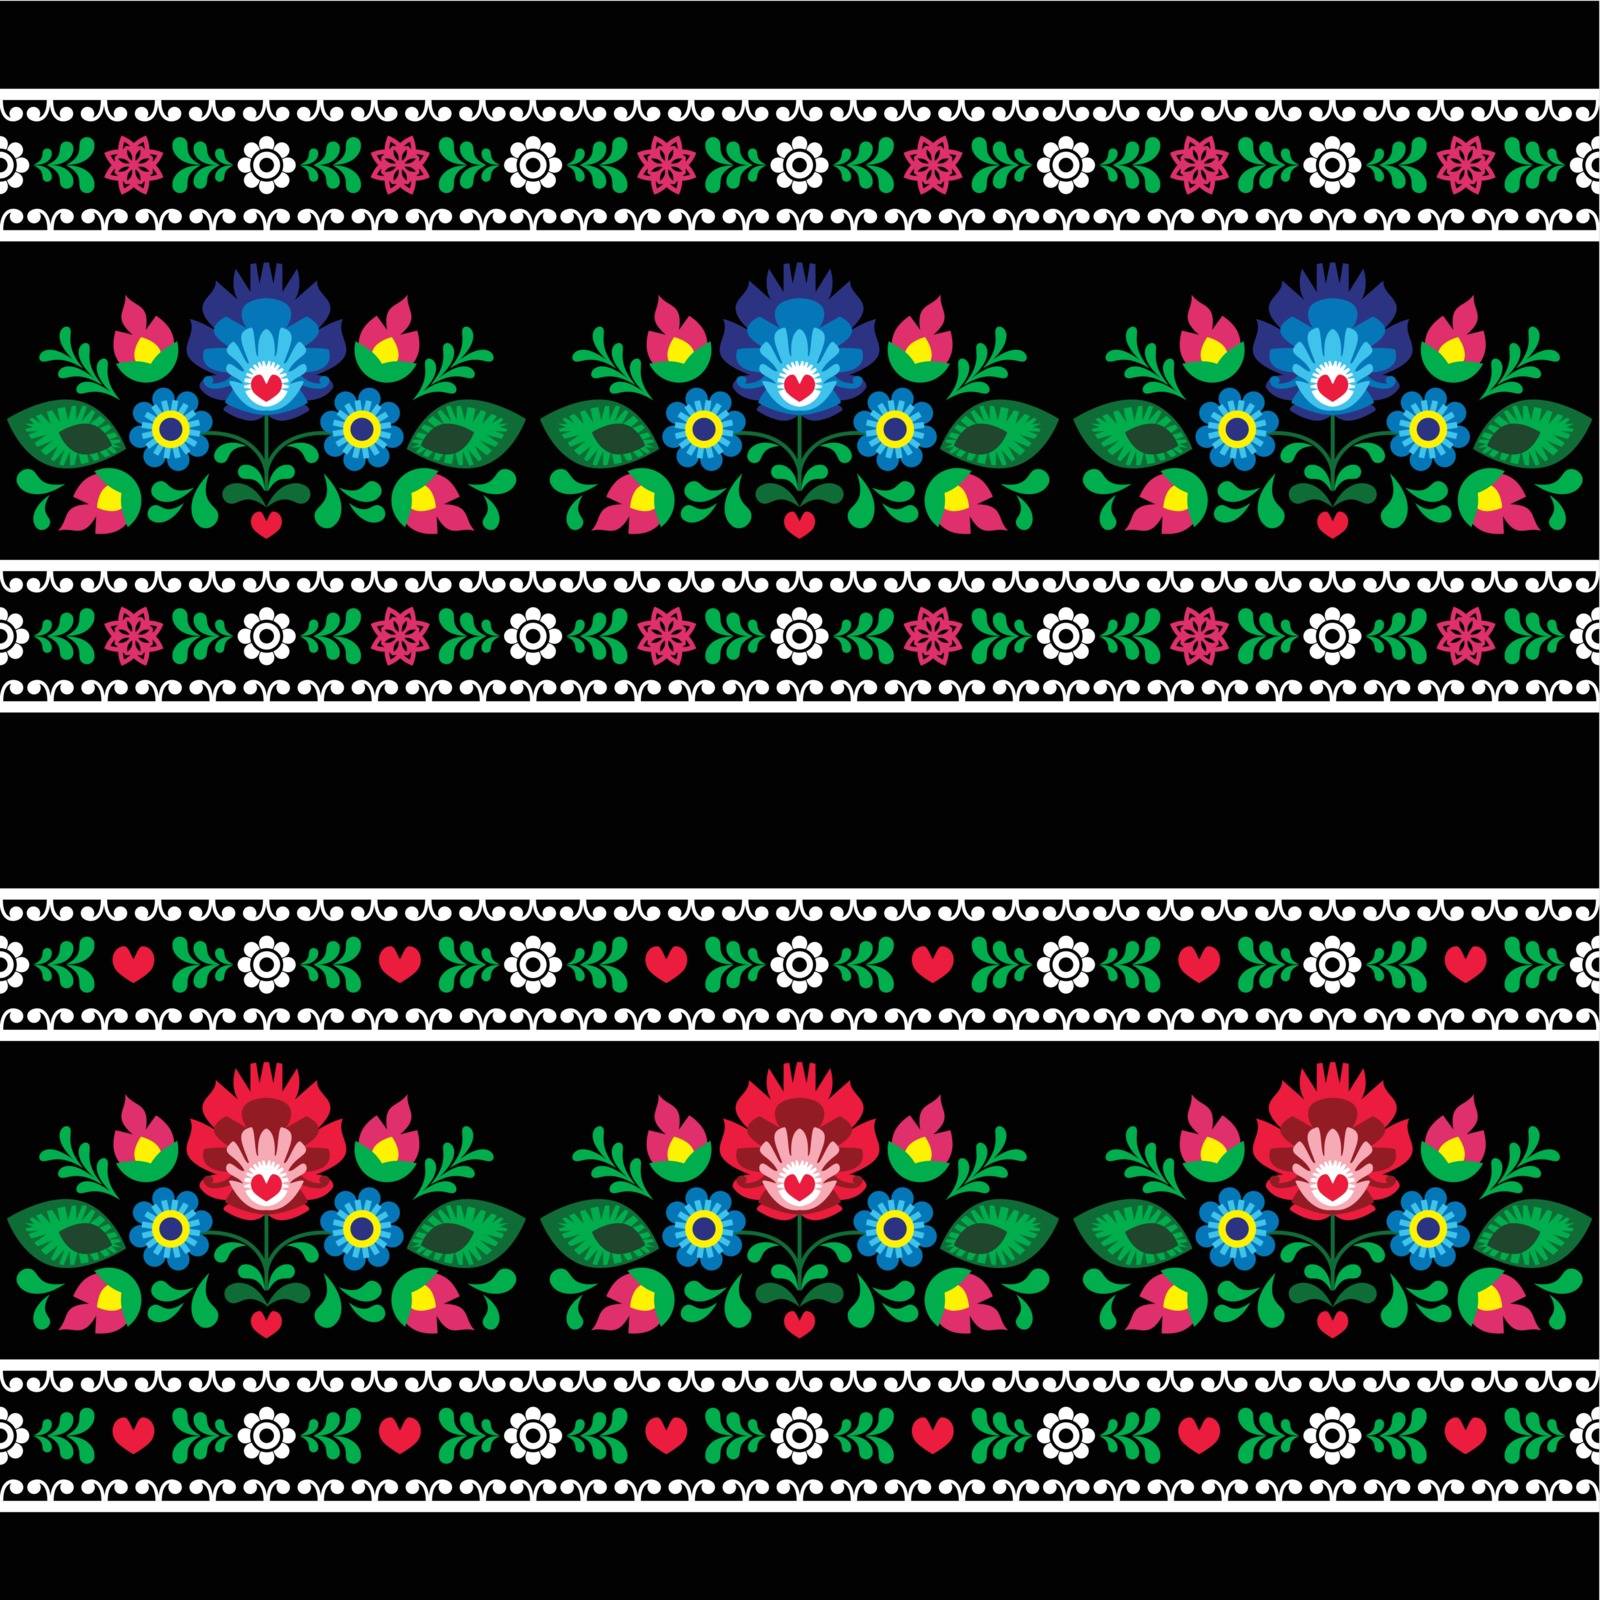 Seamless Polish folk art pattern with flowers - wzory lowickie on black by RedKoala